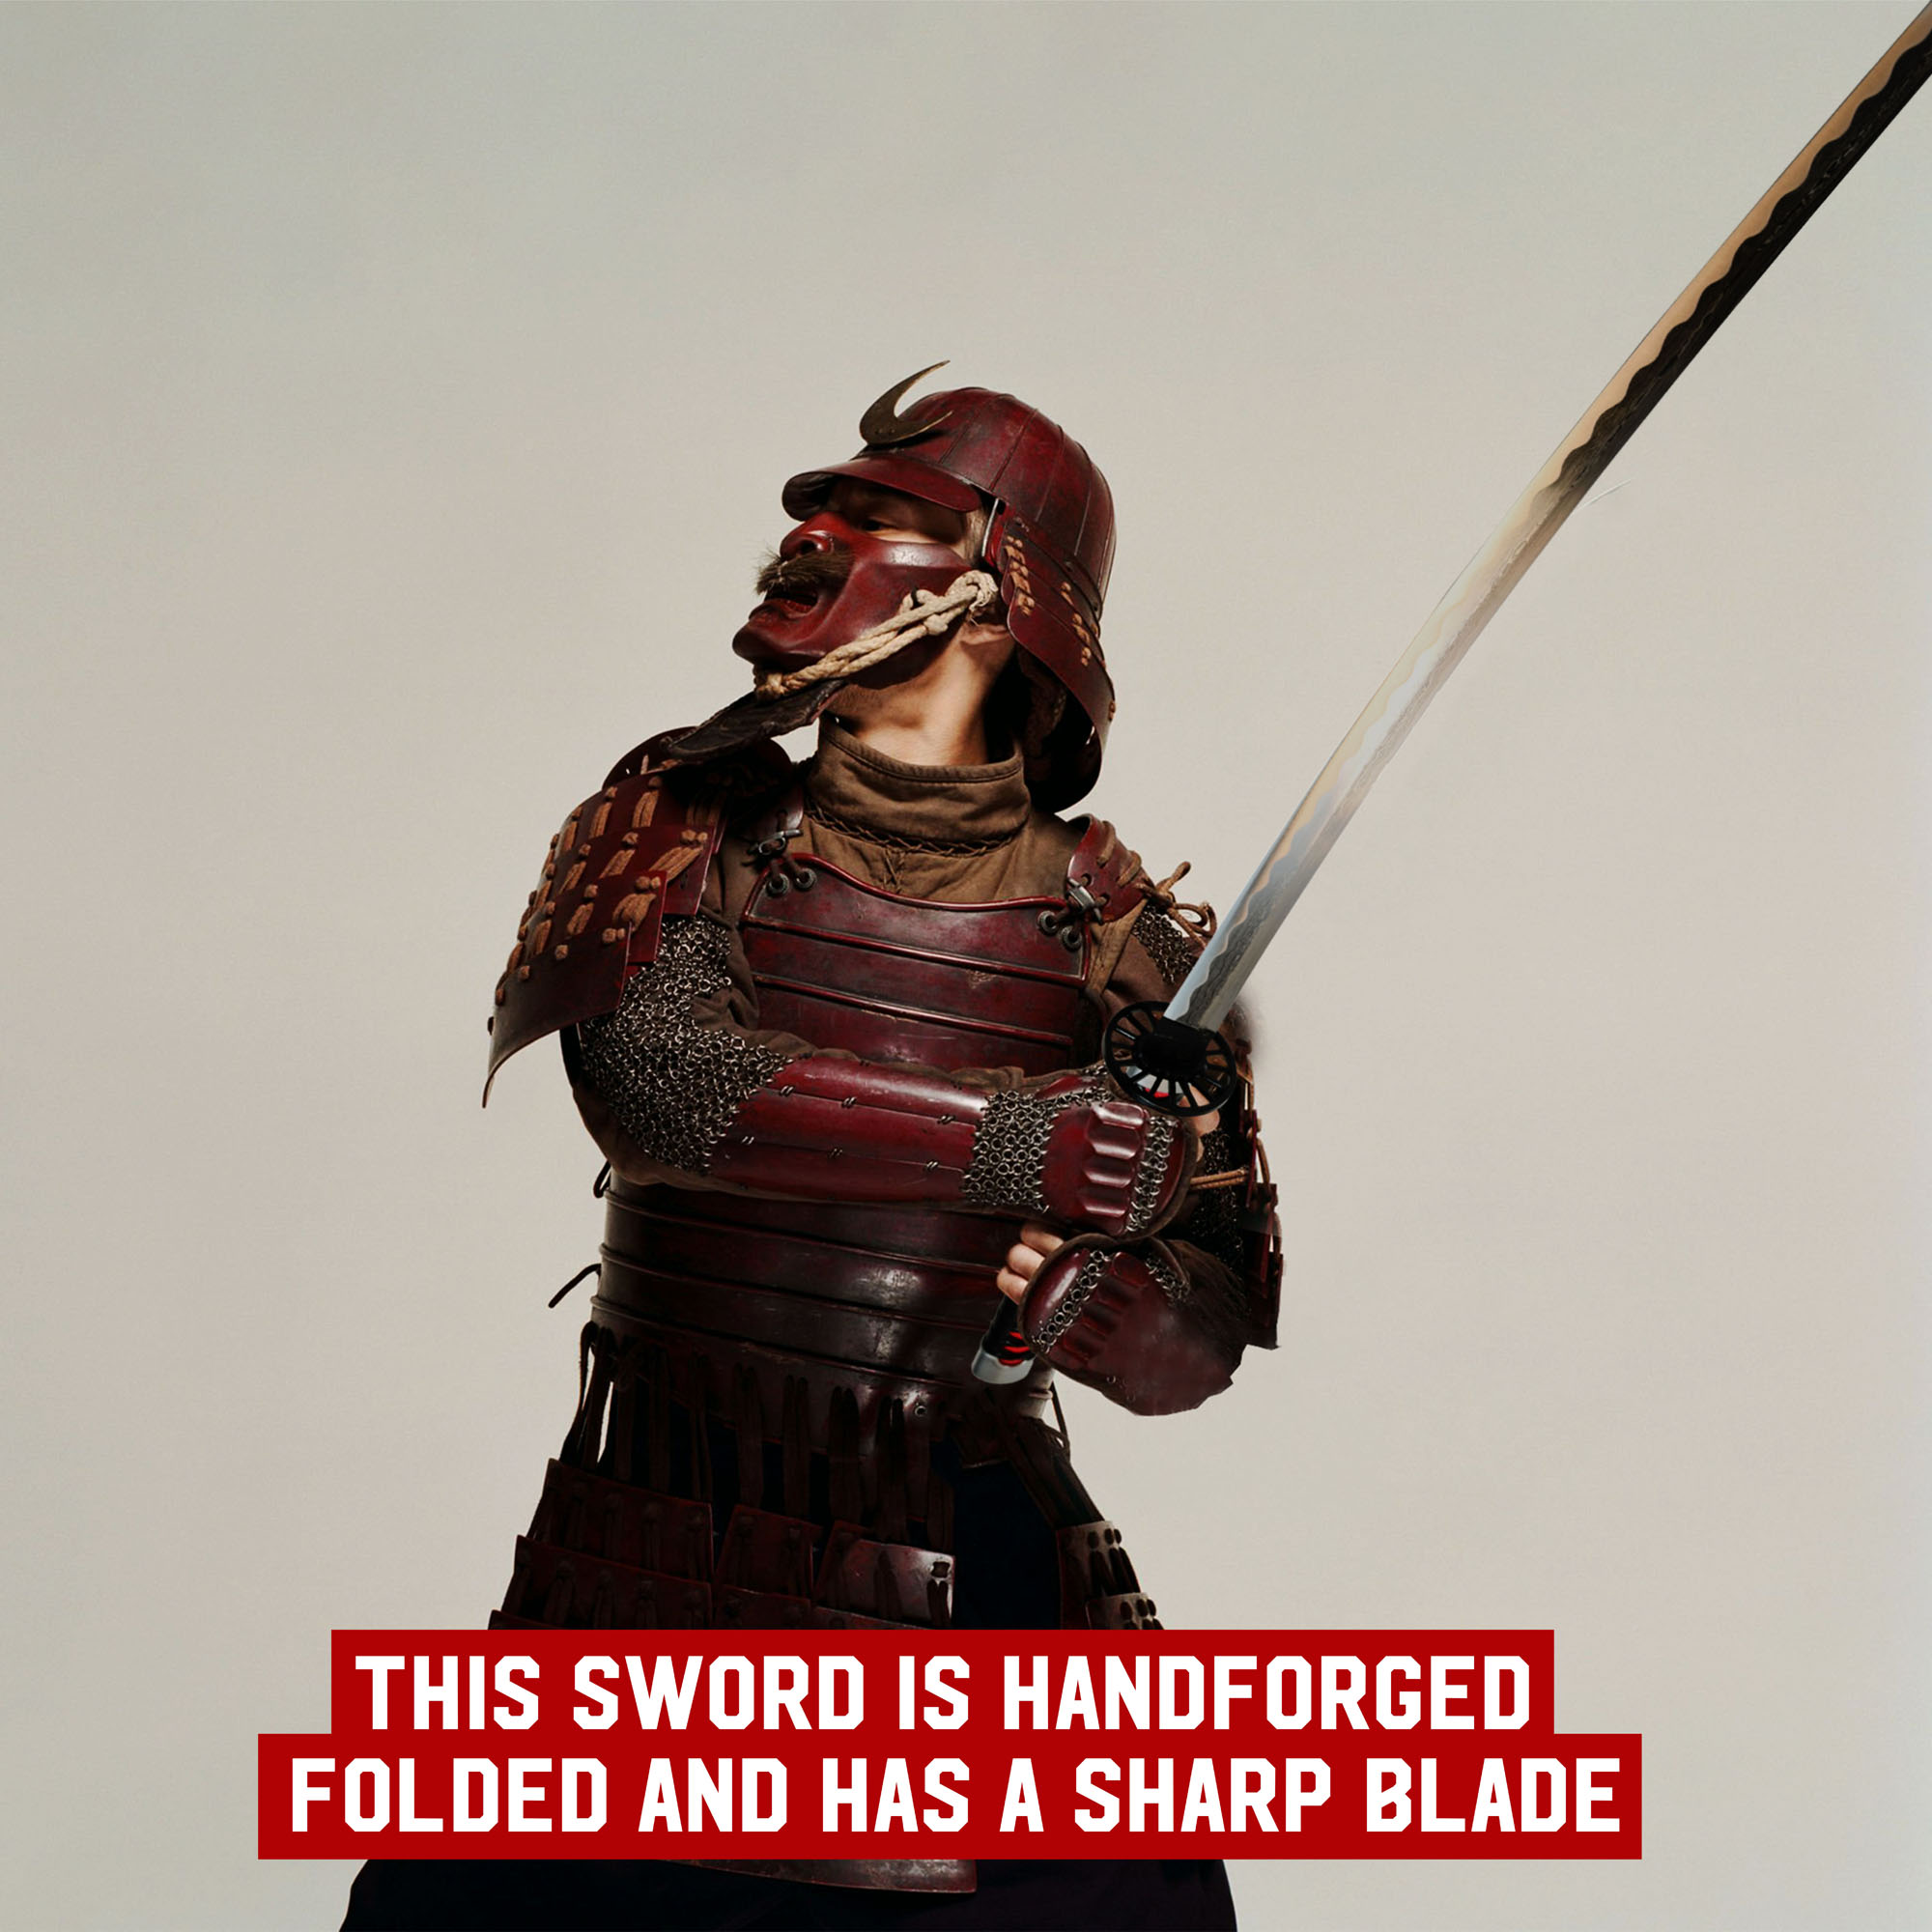 Demon Slayer: Kimetsu no Yaiba Kamado Tanjirou's Sword, handforged & folded, Set